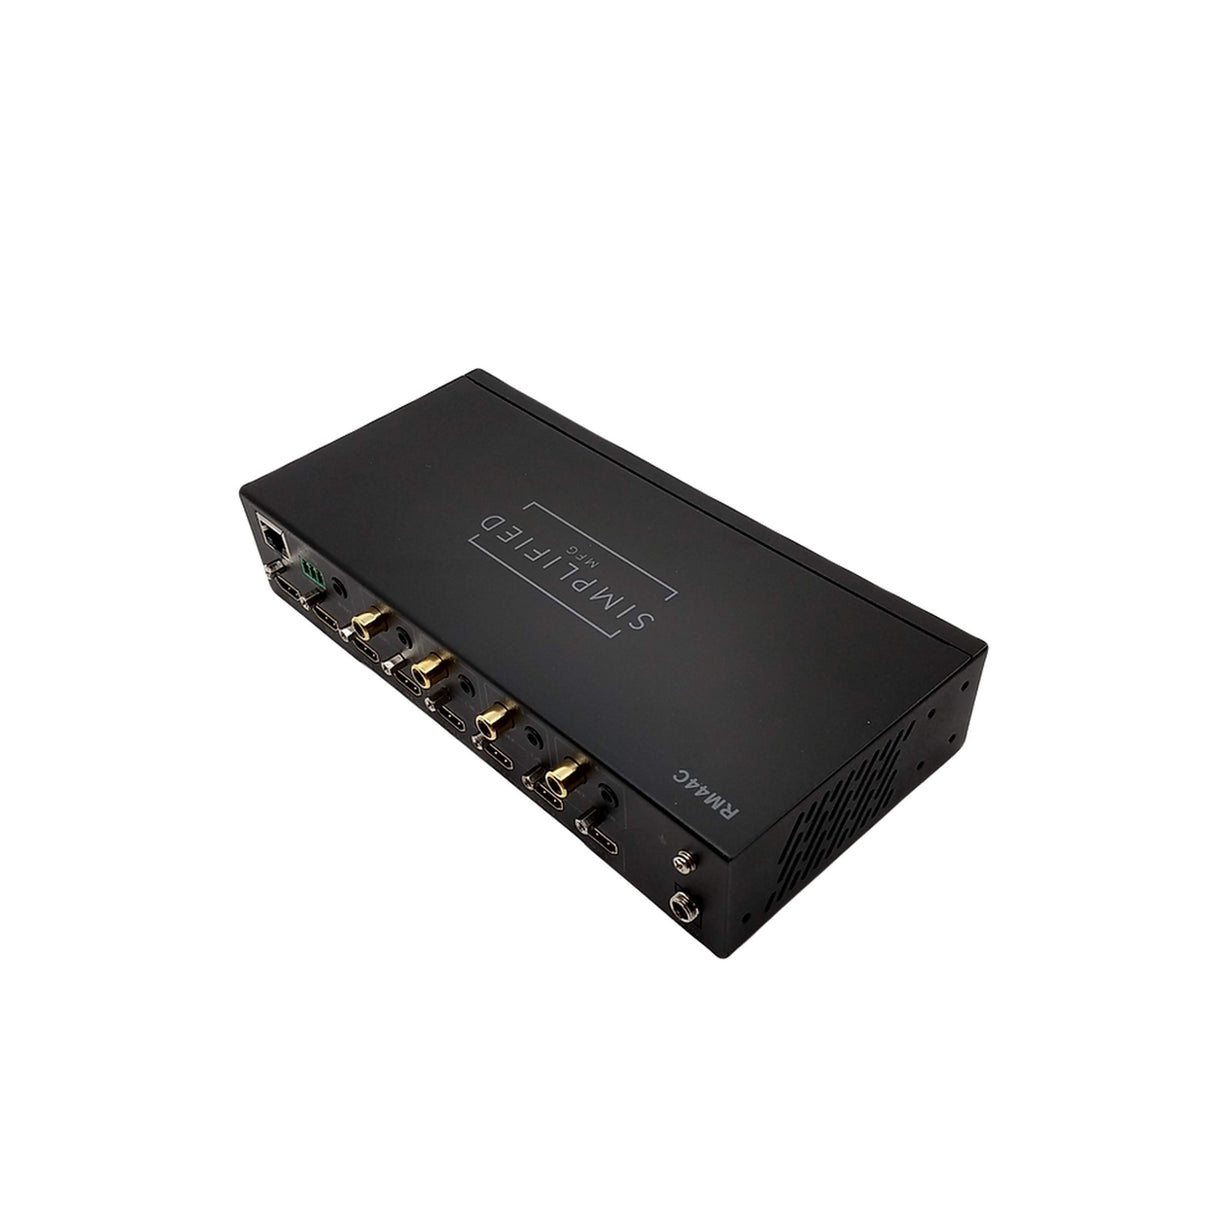 Simplified MFG RM44C 4 x 4 HDMI 18Gbps Fast Switch/Scaling Matrix Switch